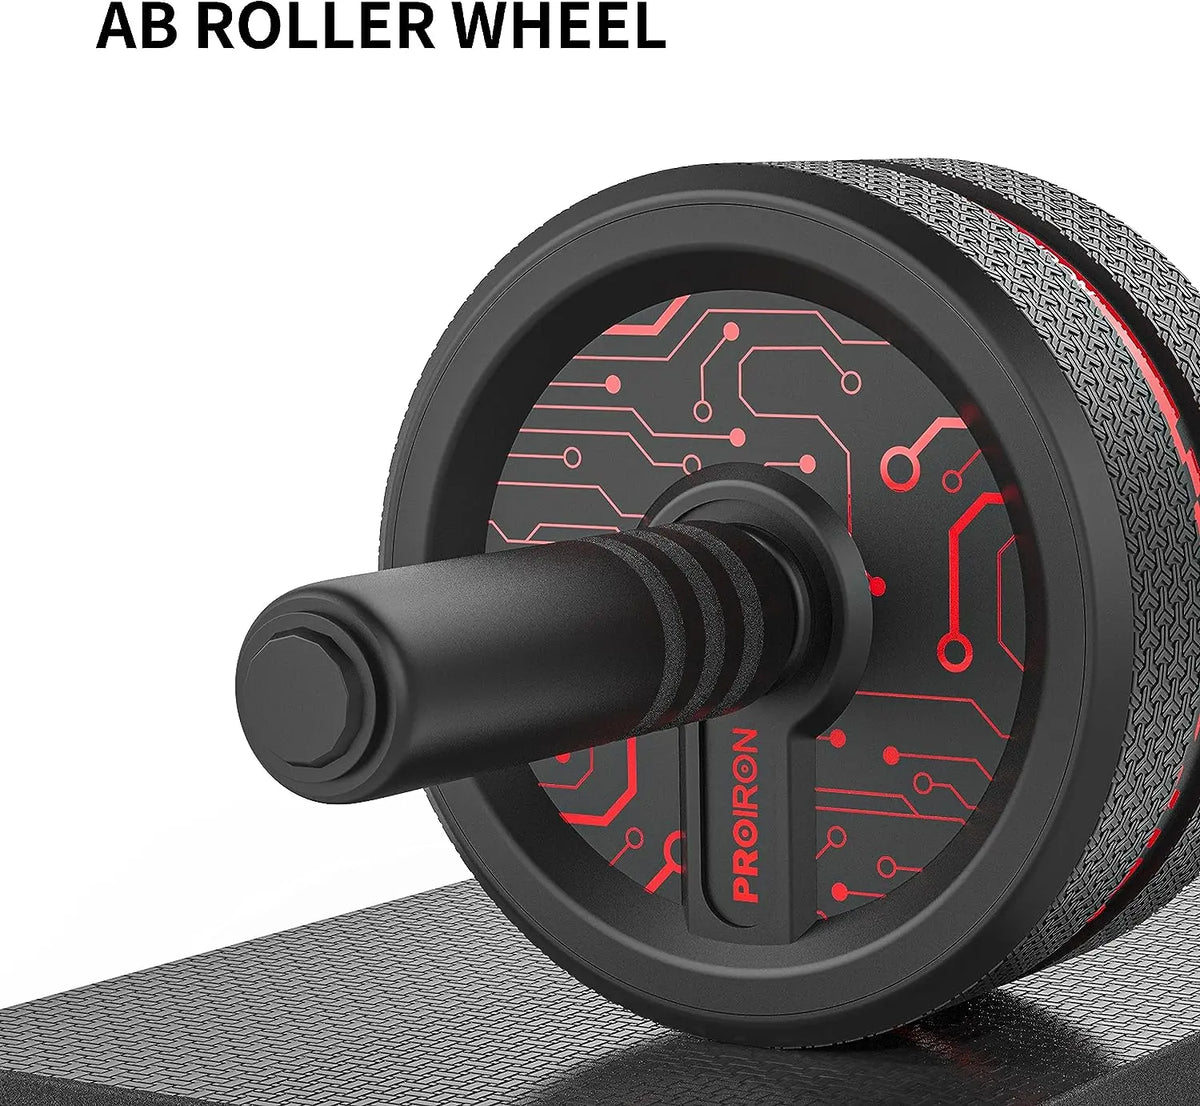 Pro Abs Roller Exercise Wheel, Abs Roller Wheel